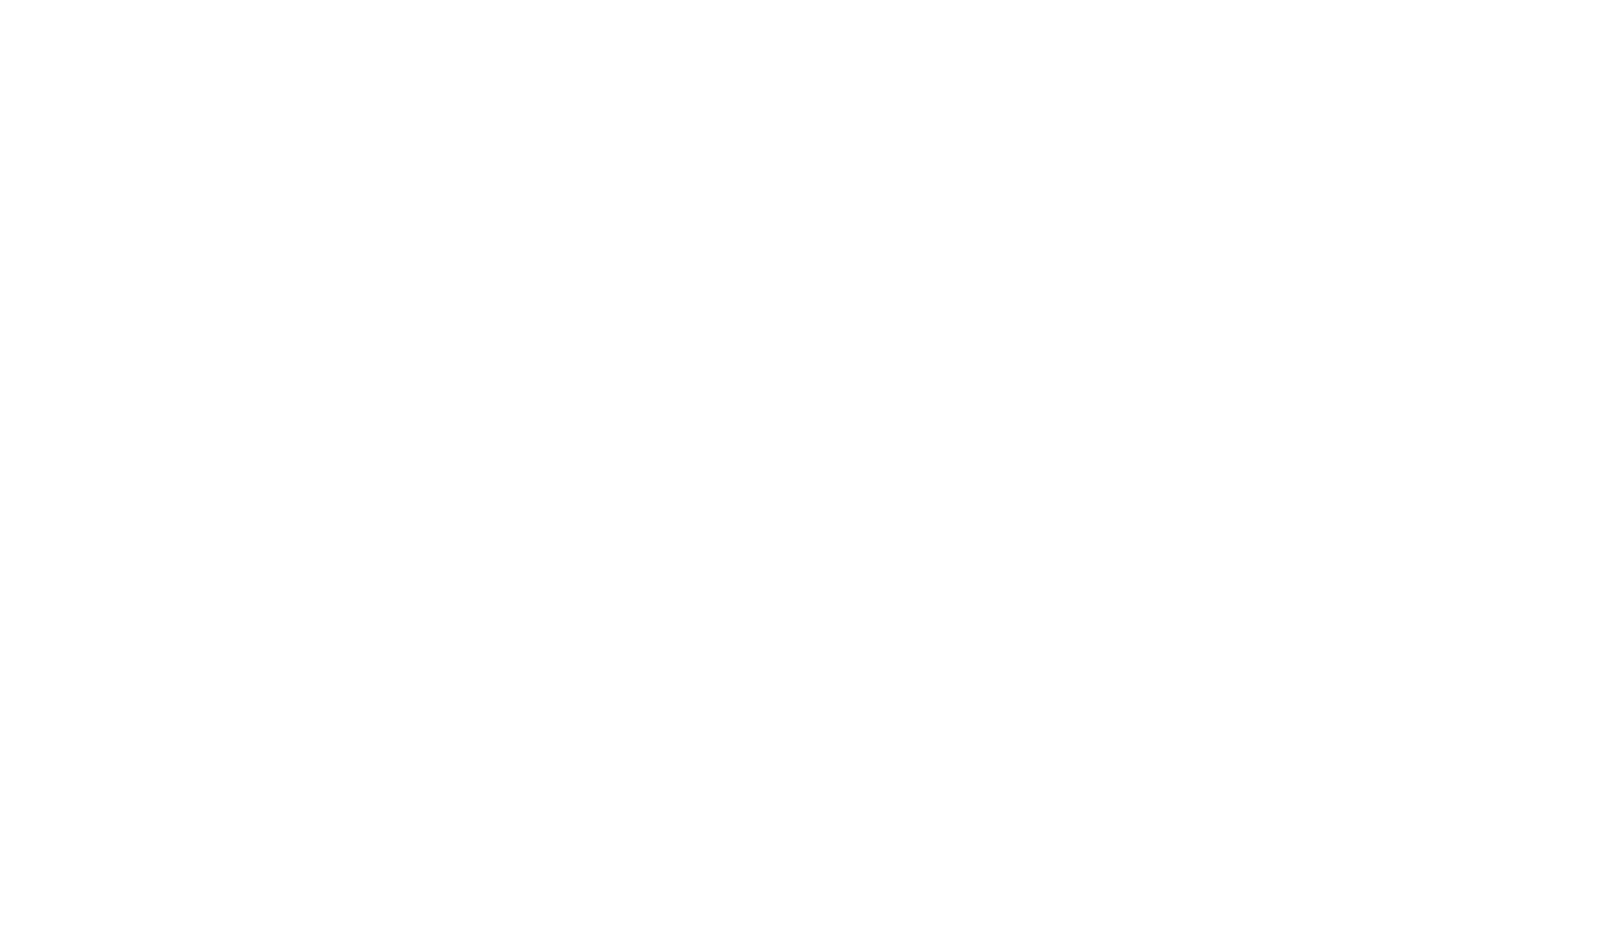 Banca Generali logo pour fonds sombres (PNG transparent)